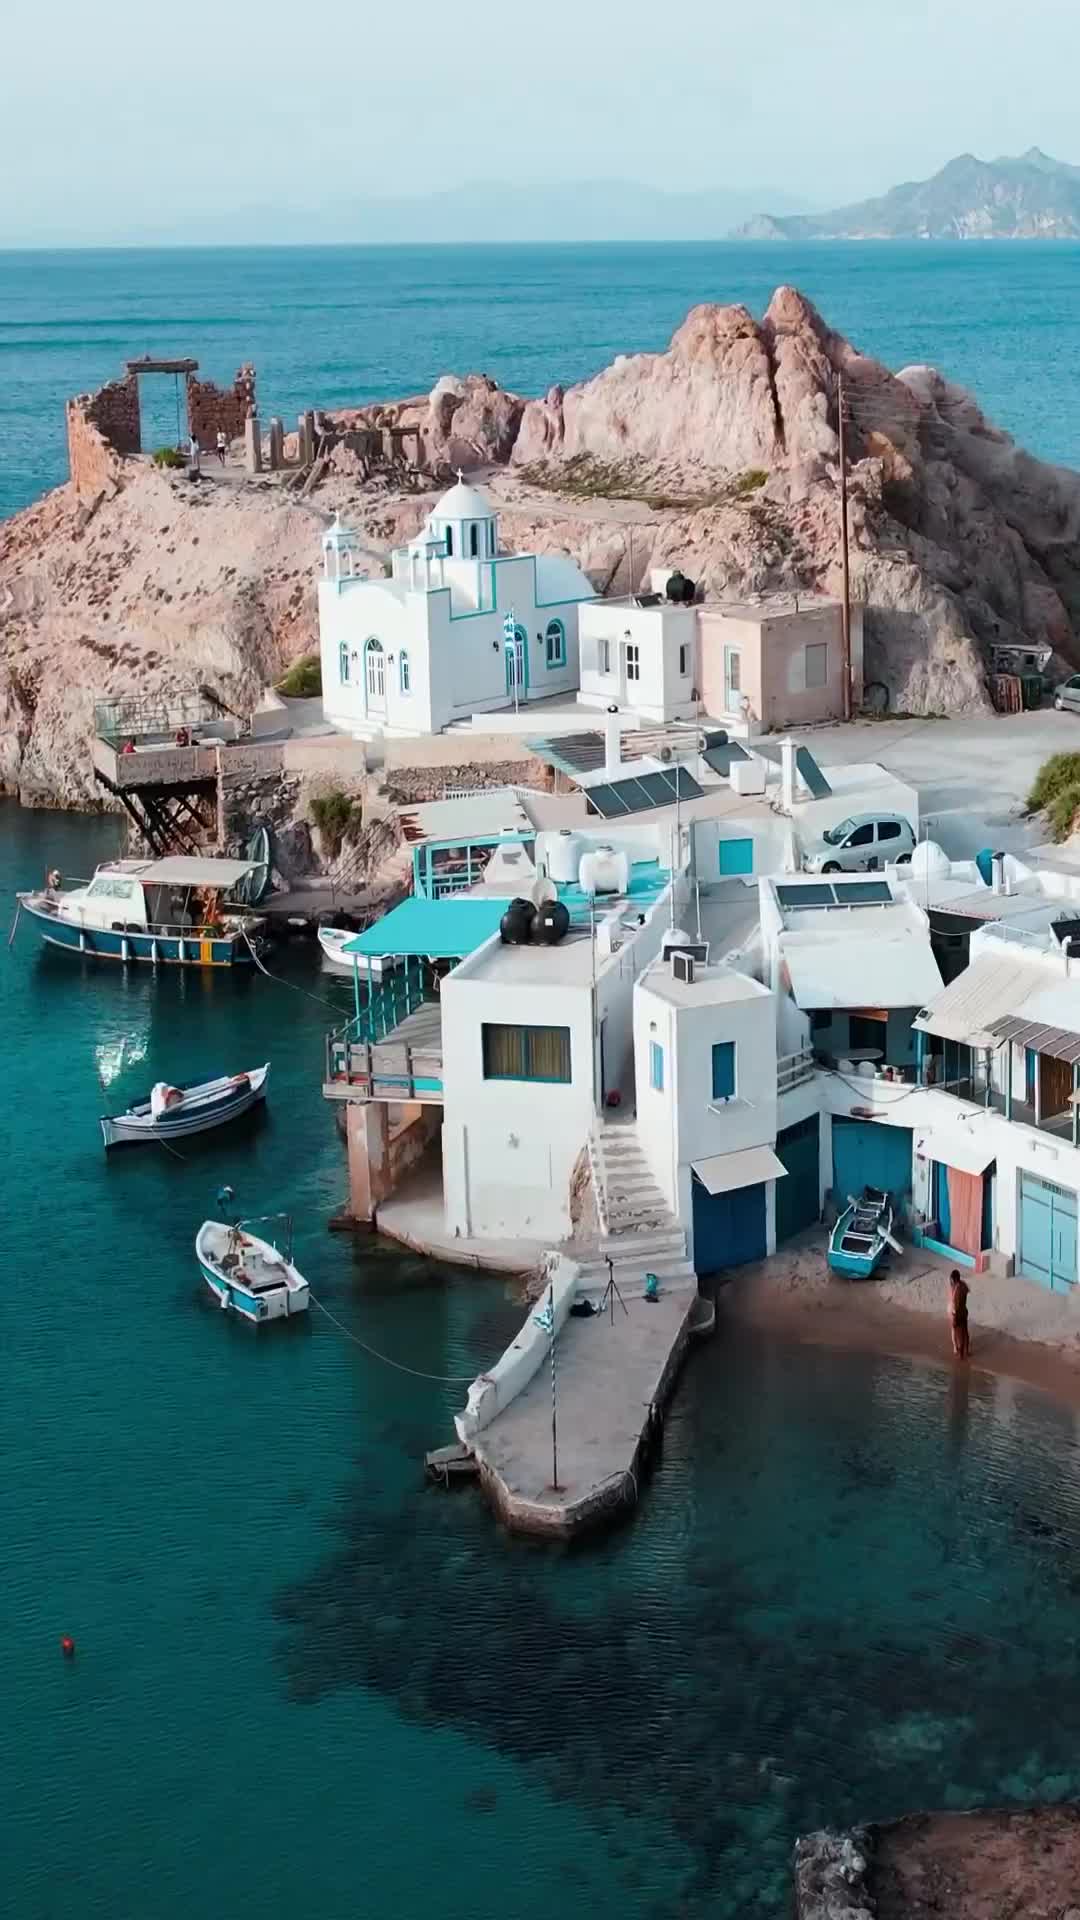 📍Firopotamos Milos Island 
.
.
.
.
.
.
.
.
.
.
.
.
.
.
.
.
.
.
.
.
.
.
#milosisland #greece #beautifuldestinations #earthpix #vacation #greecenaturelove #greecestagram #greeceislands #greecetravel #greek #summer #summervibes #greecelover #greece_travel #visitgreece #greece_is_awesome #nature #sea #destinations #drone #travellingthroughtheworld #hello_rooftops #perfect_greece #milosgreece